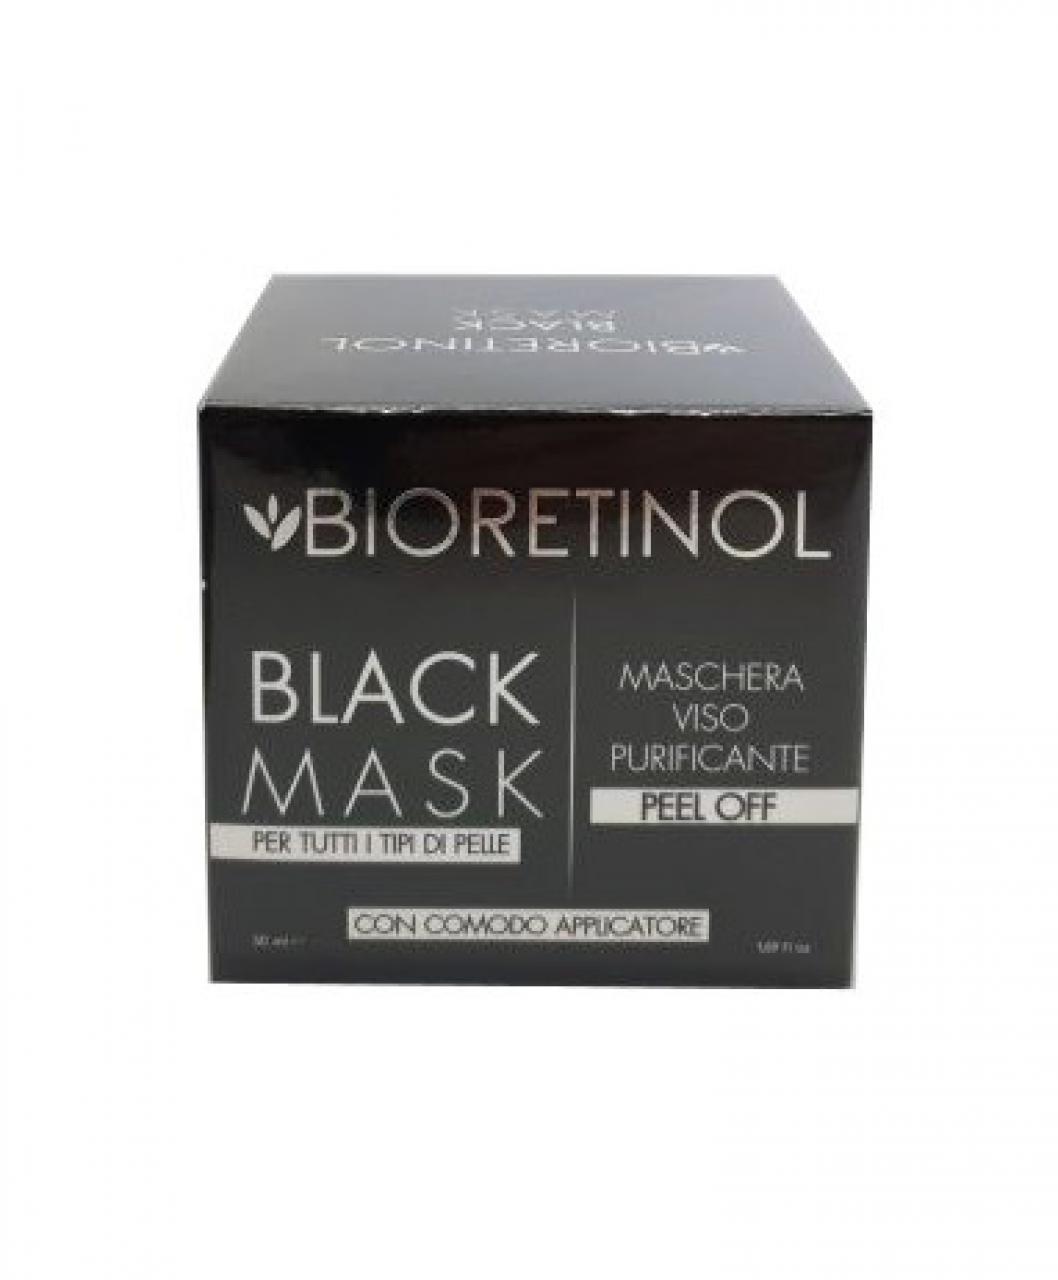 Bioretinol black mask